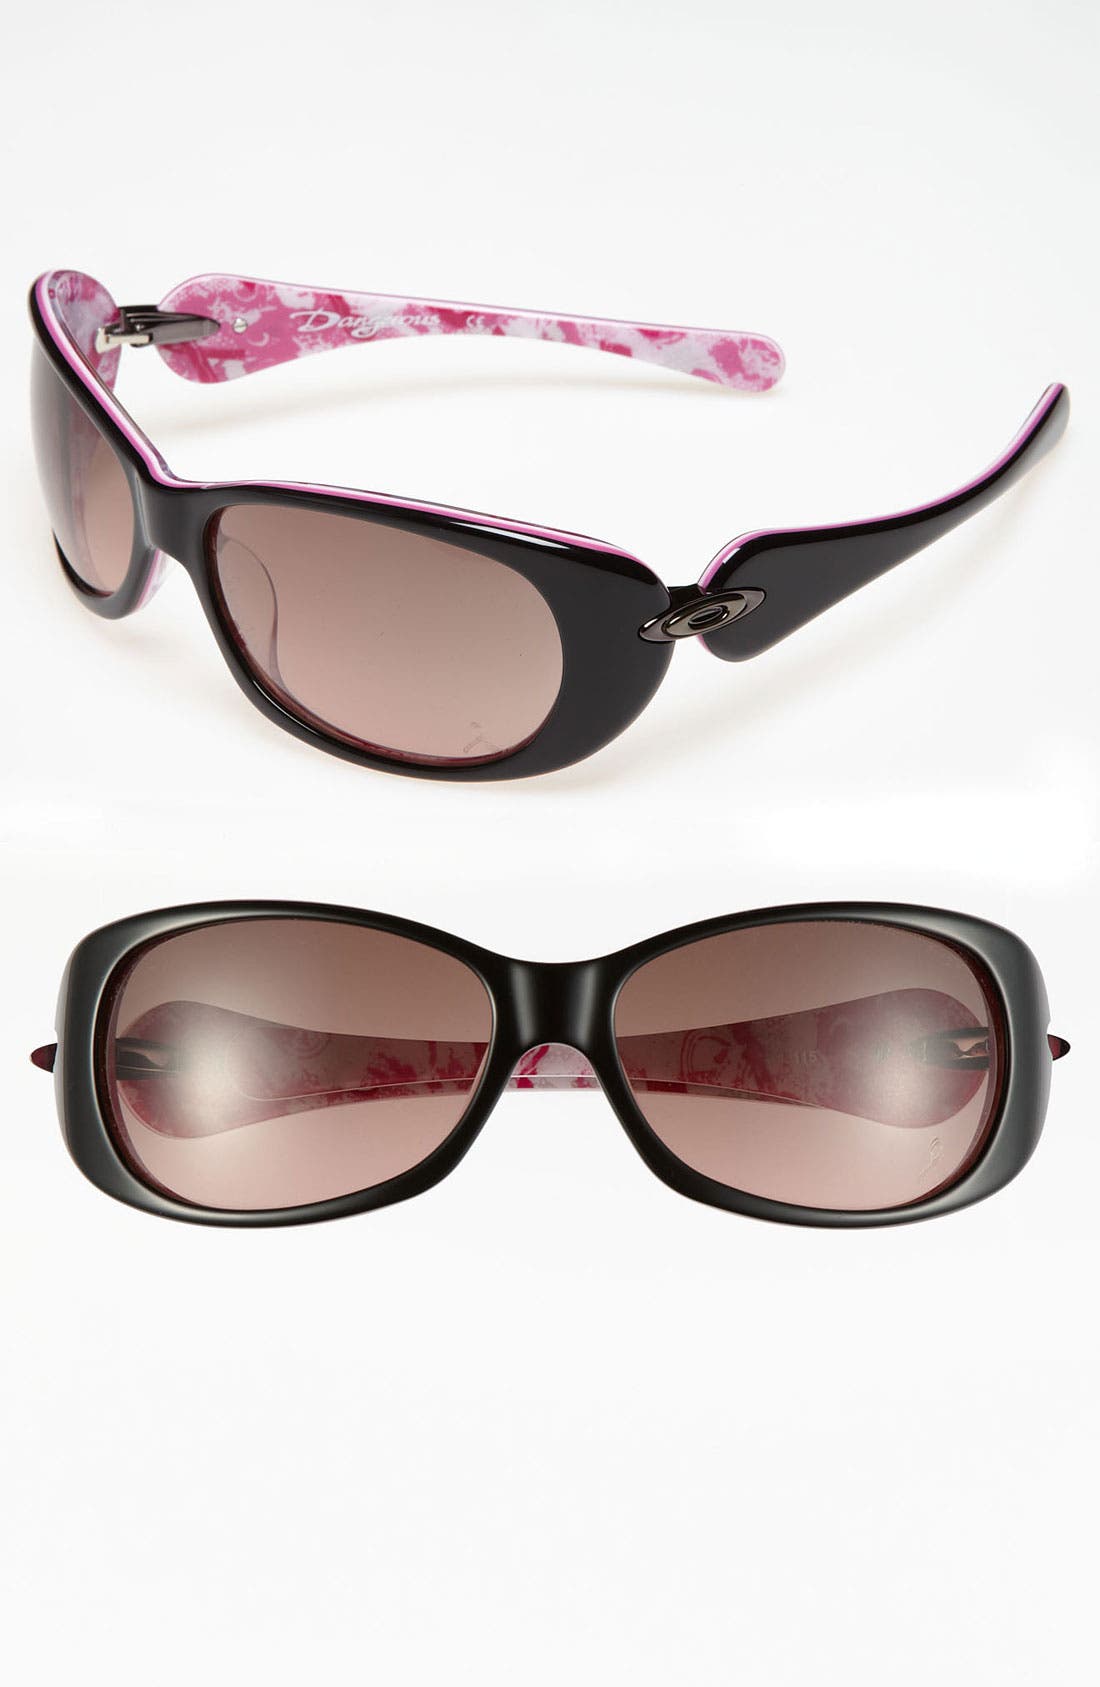 oakley cancer awareness sunglasses